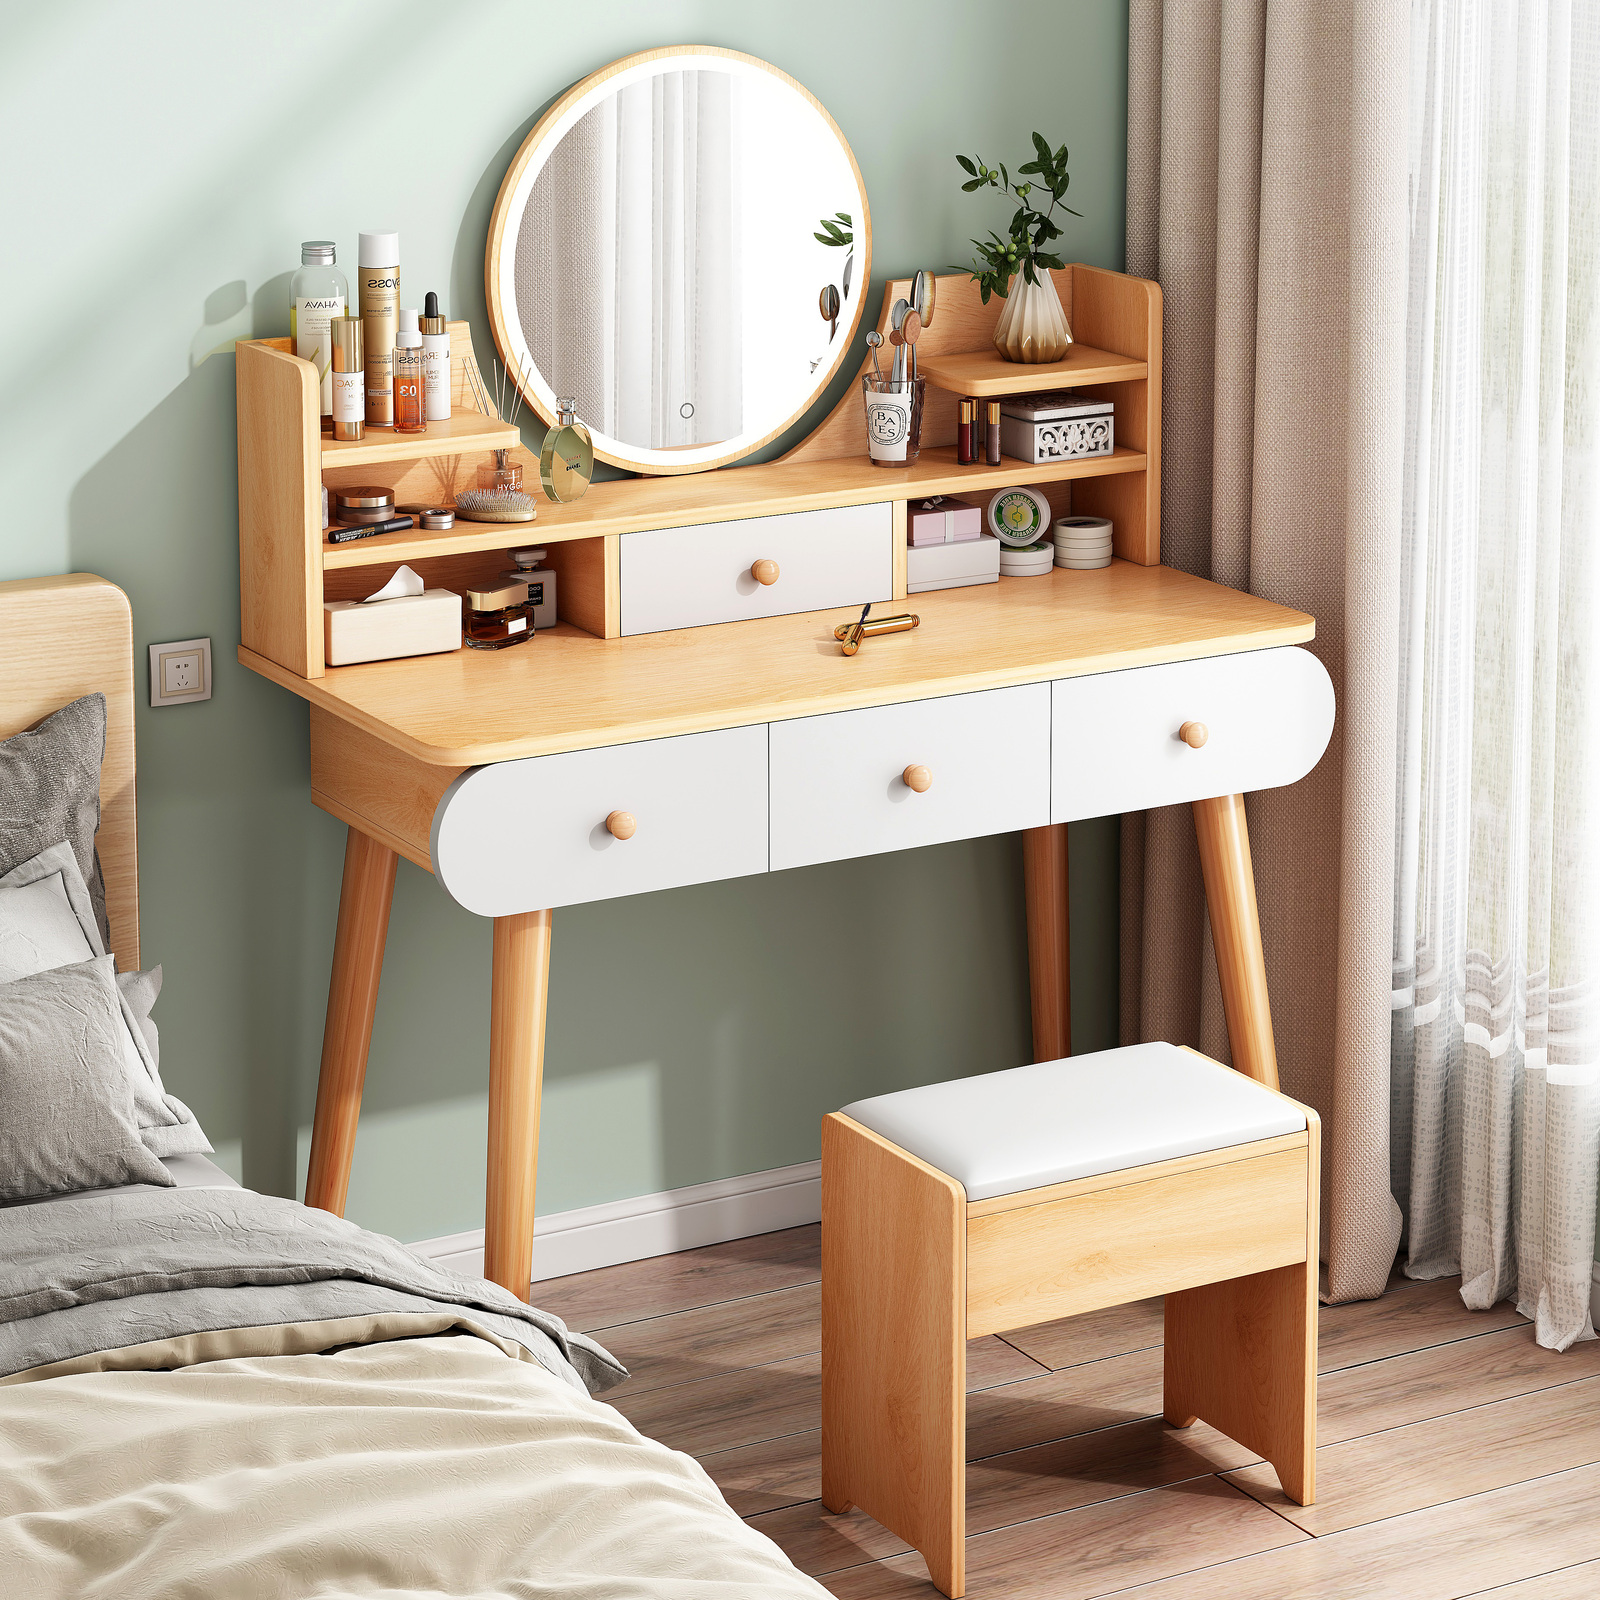 LED Luminous Beauty Large Dresser Vanity Table with Mirror, Stool and Storage Drawers Set (Oak)